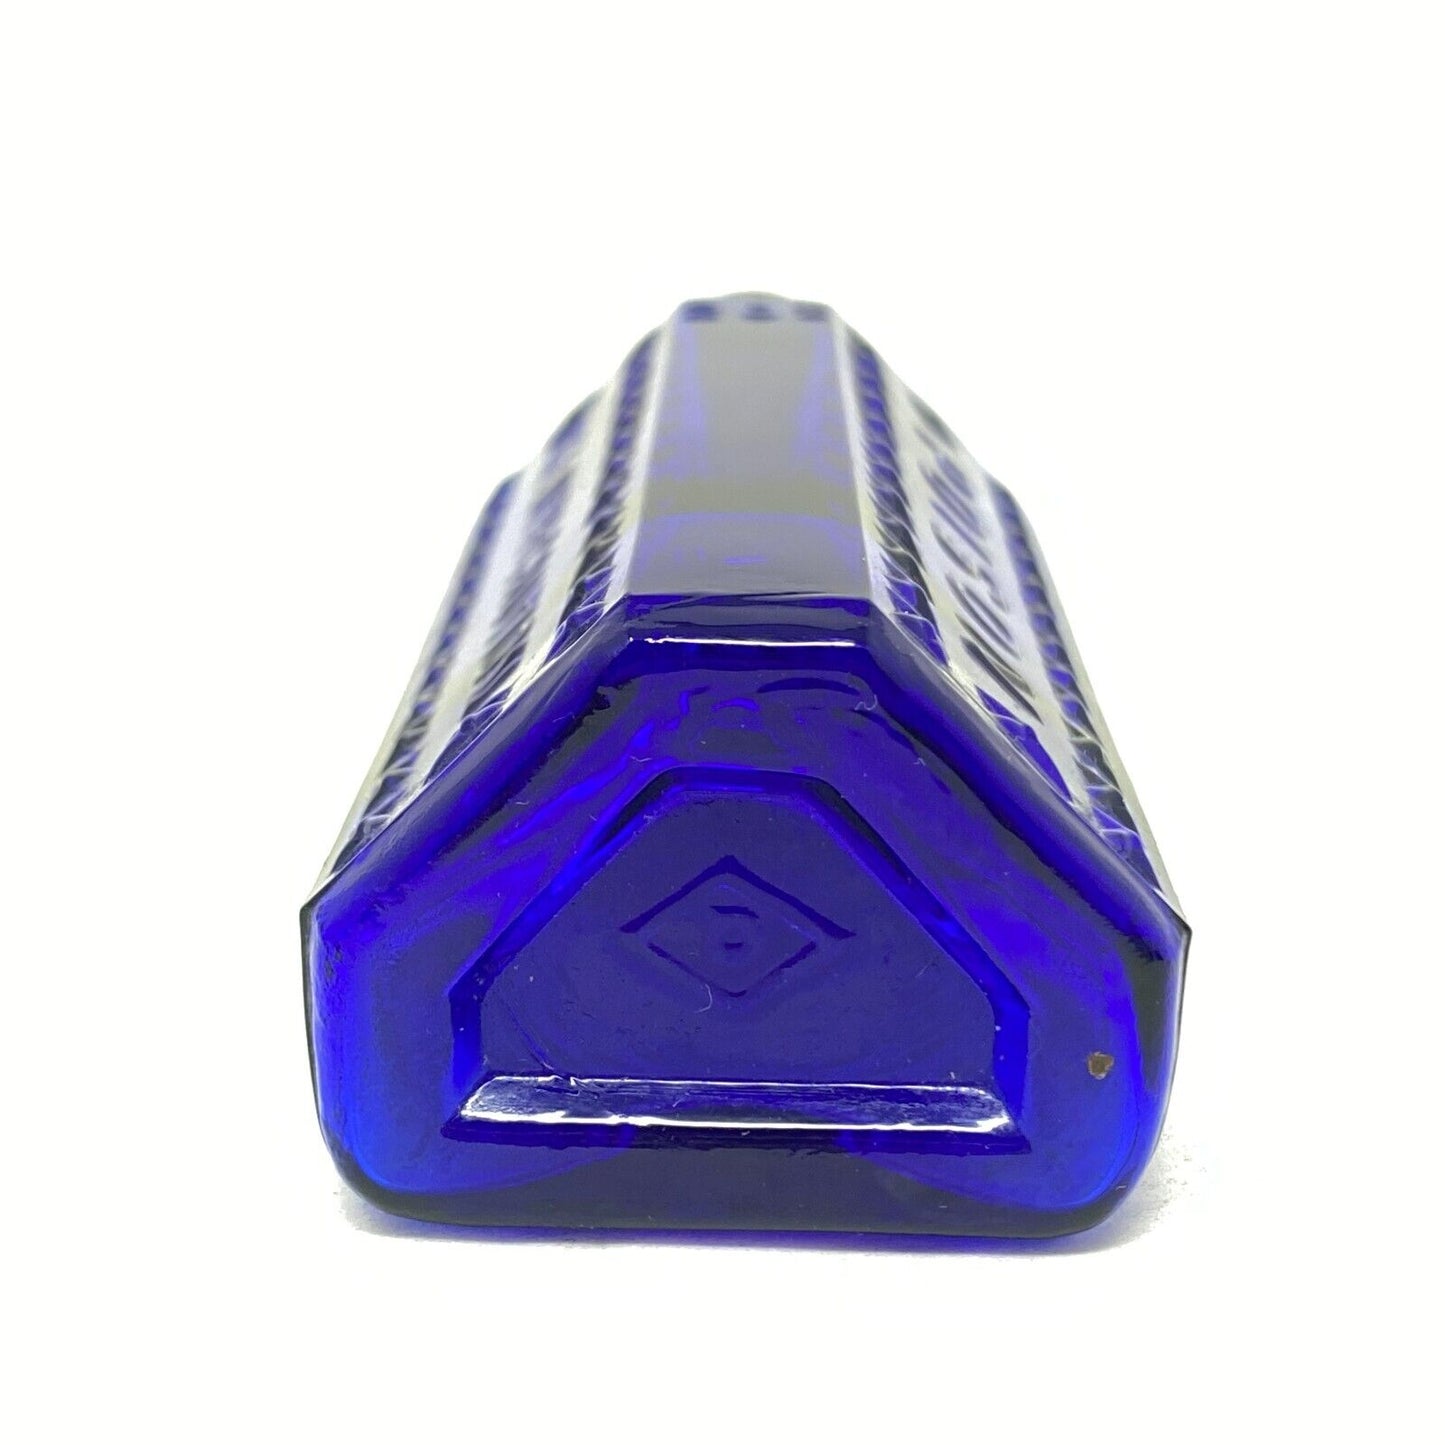 Antique Cobalt Blue 2oz. Carbolic Acid Canadian Poison Bottle